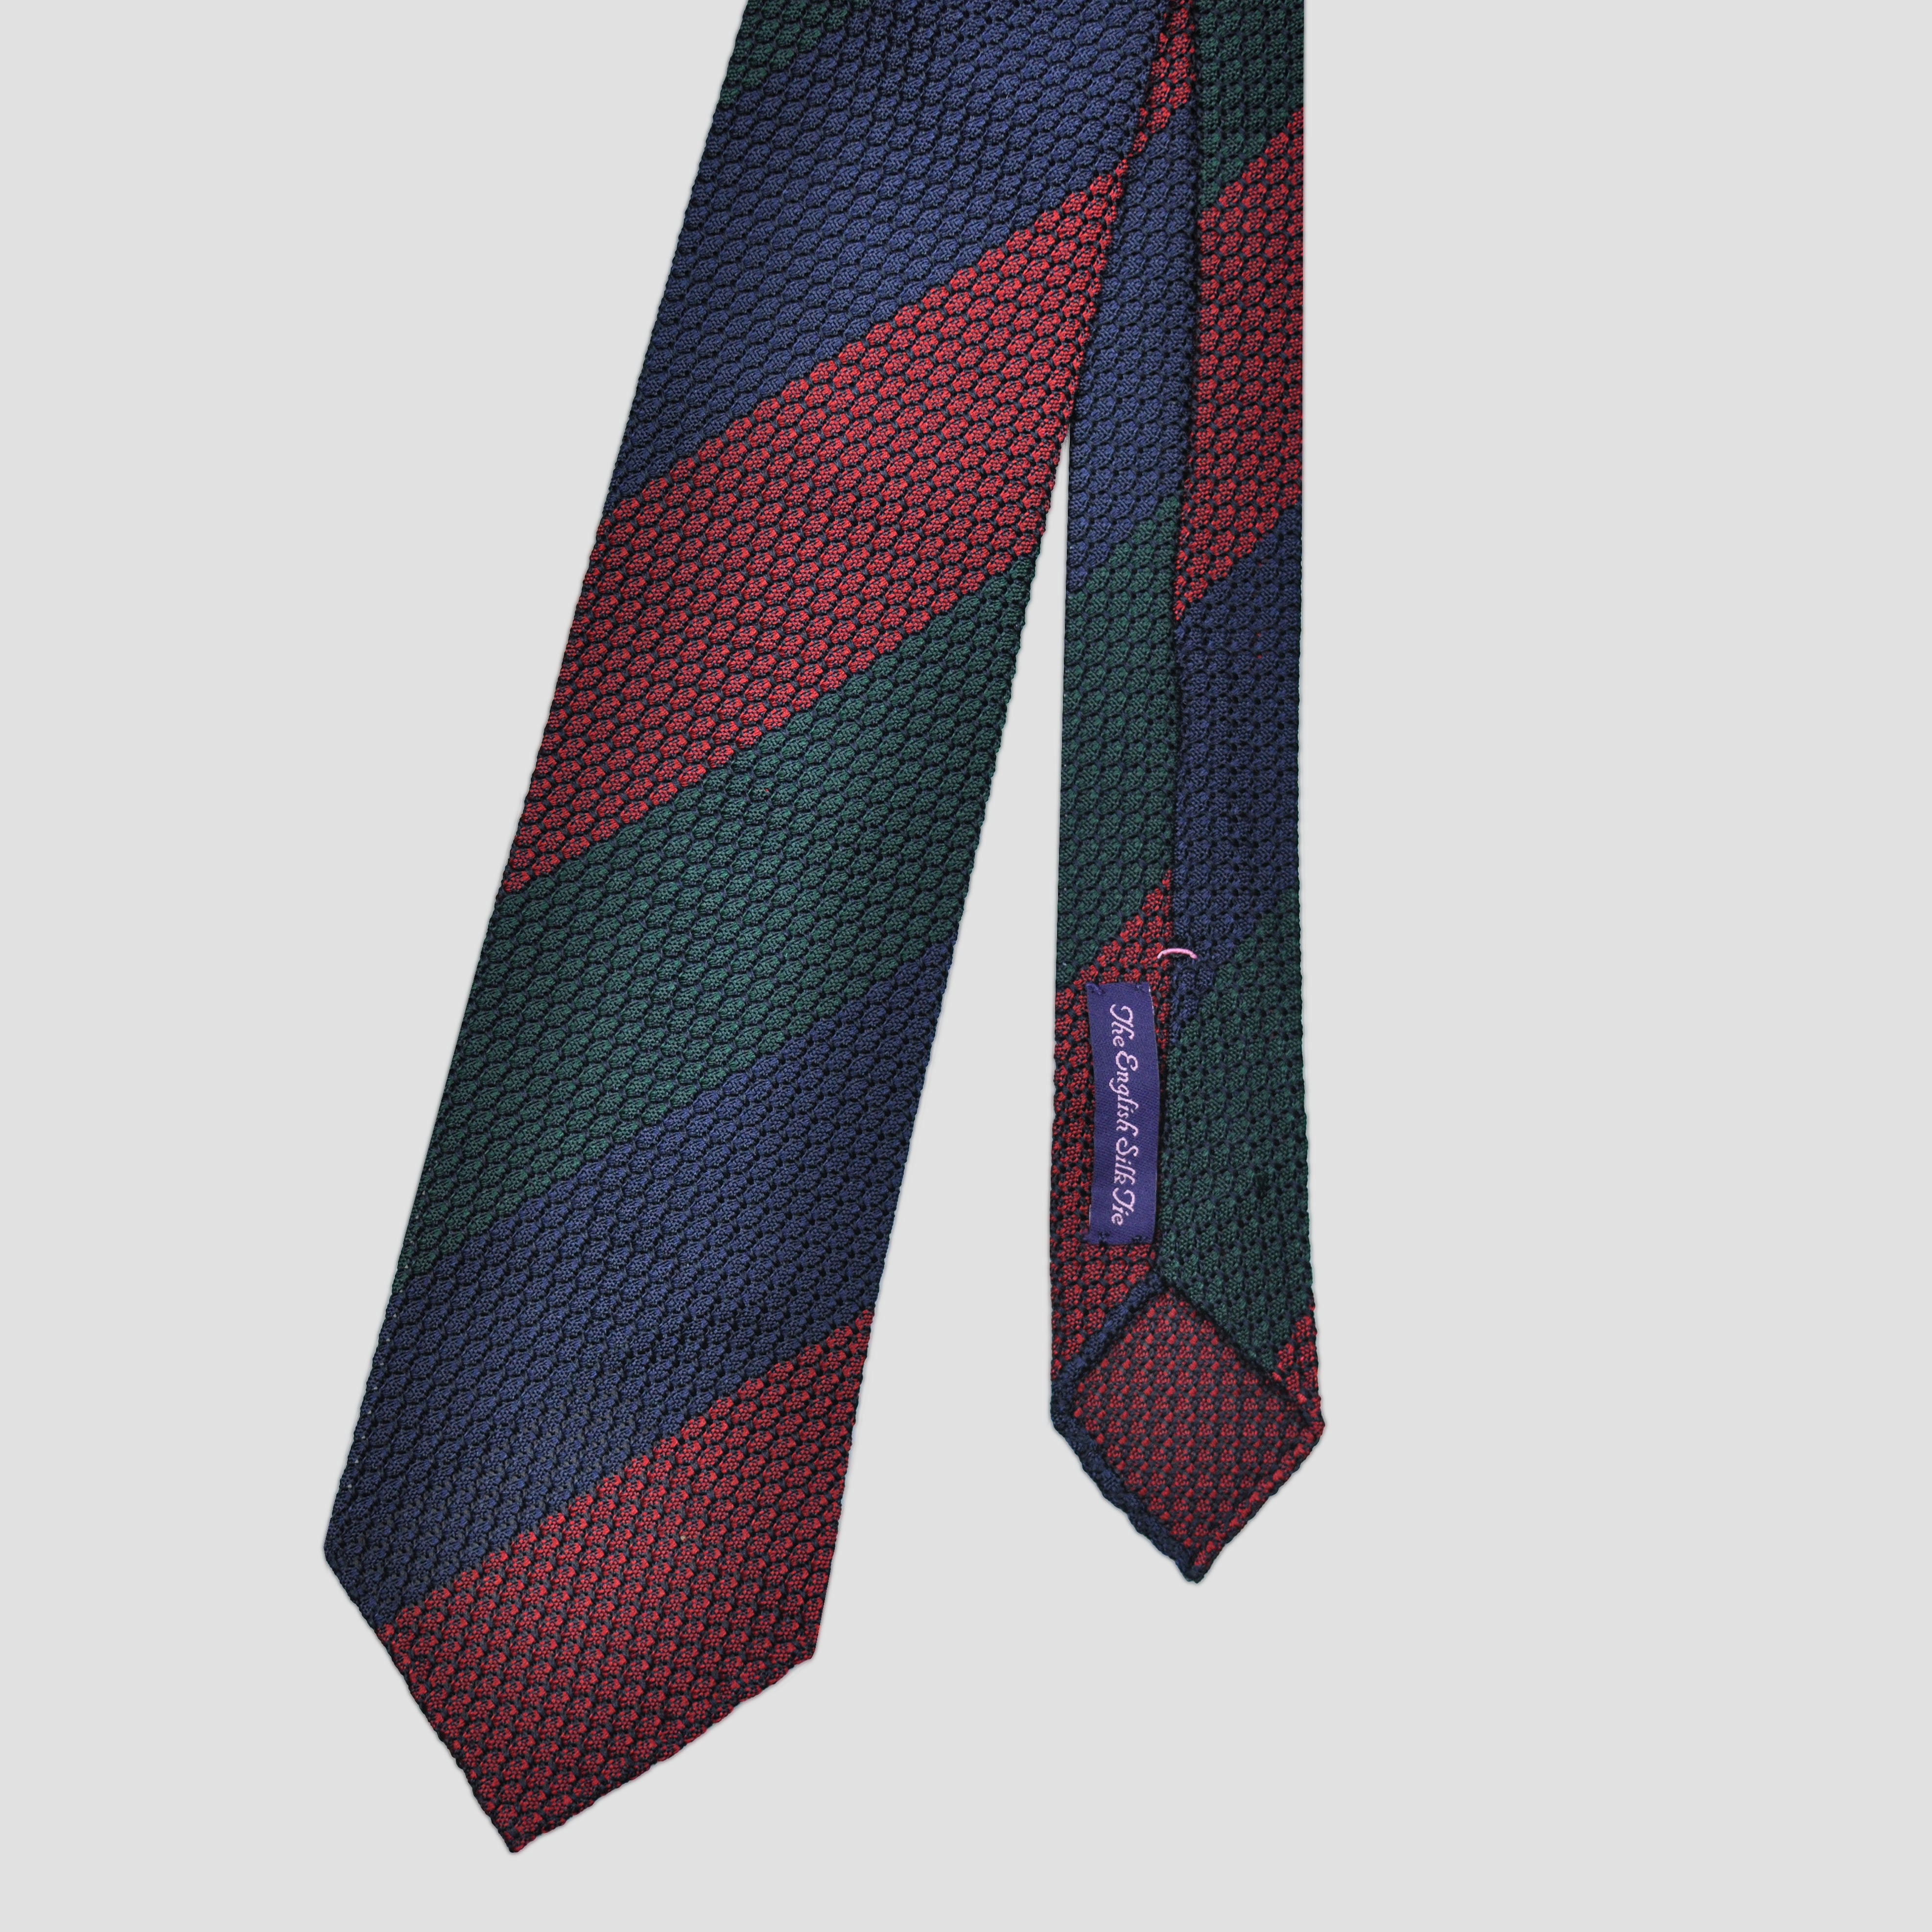 Bold Stripes Handrolled Grenadine Silk Tie in Navy, Green & Claret